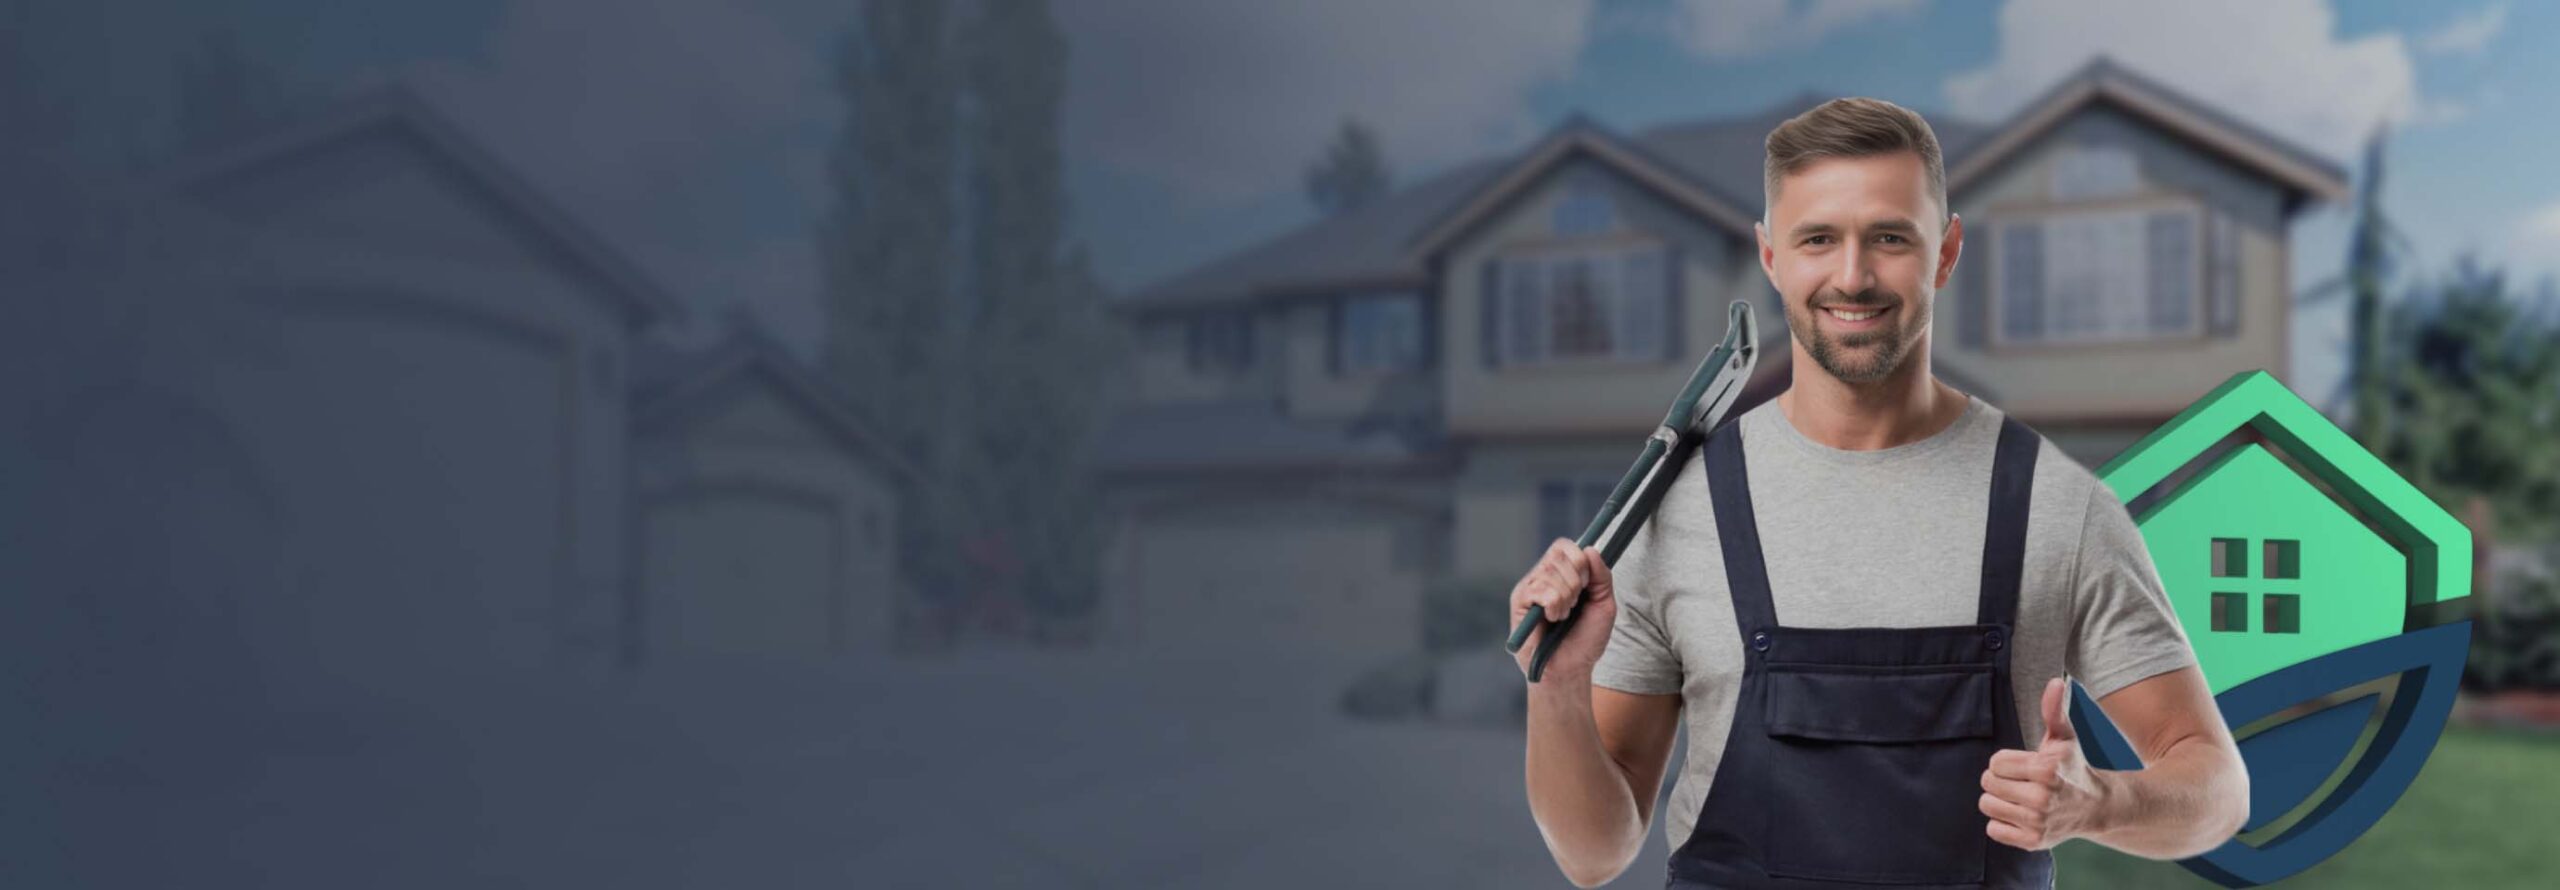 residential home warranty services regina